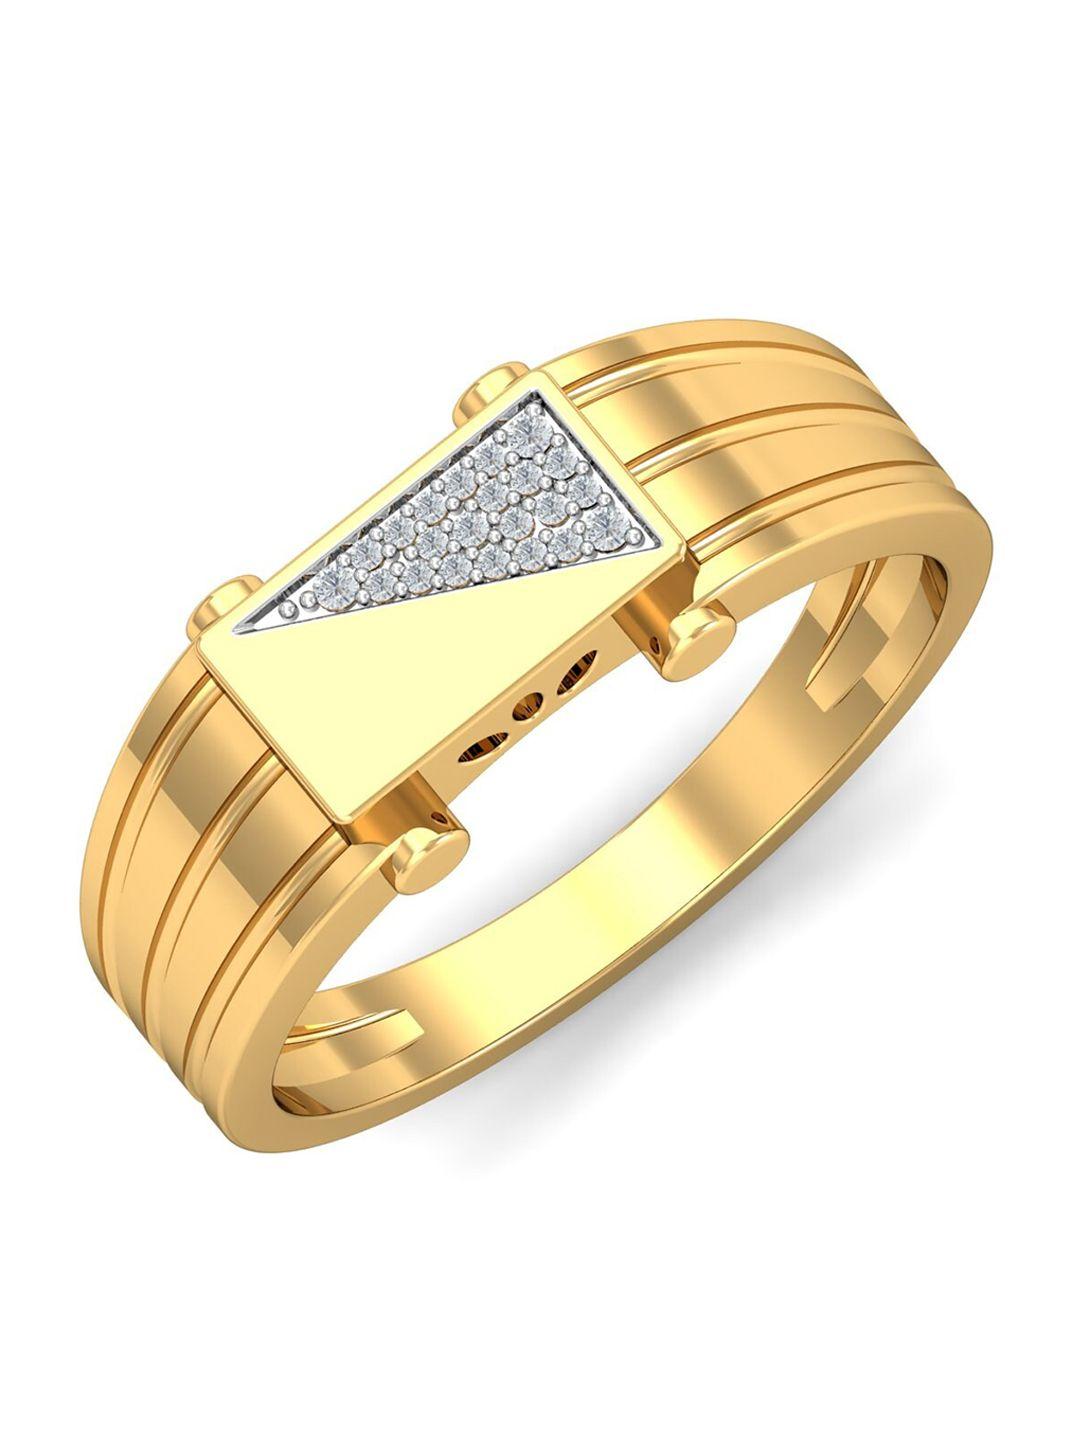 kuberbox men eldo 18kt gold diamond-studded ring-4.84 gm